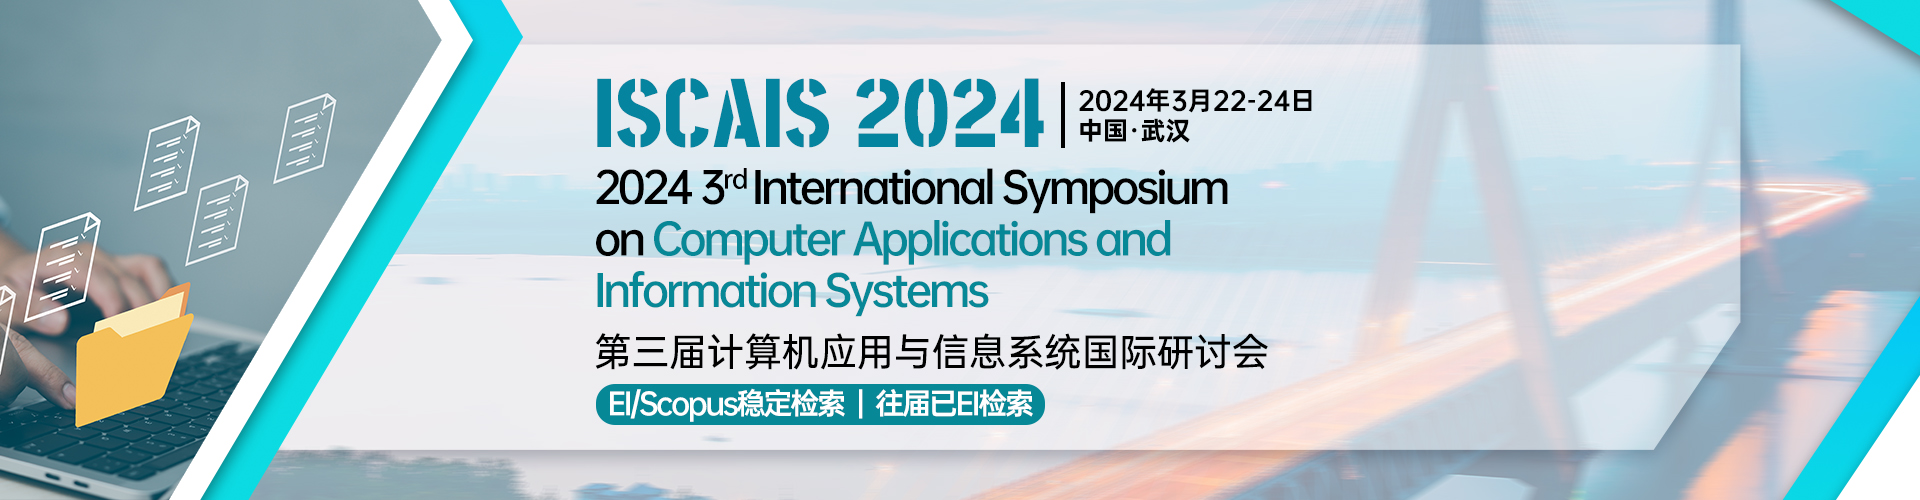 ISCAIS 2024-艾思平台（上线平台）.jpg